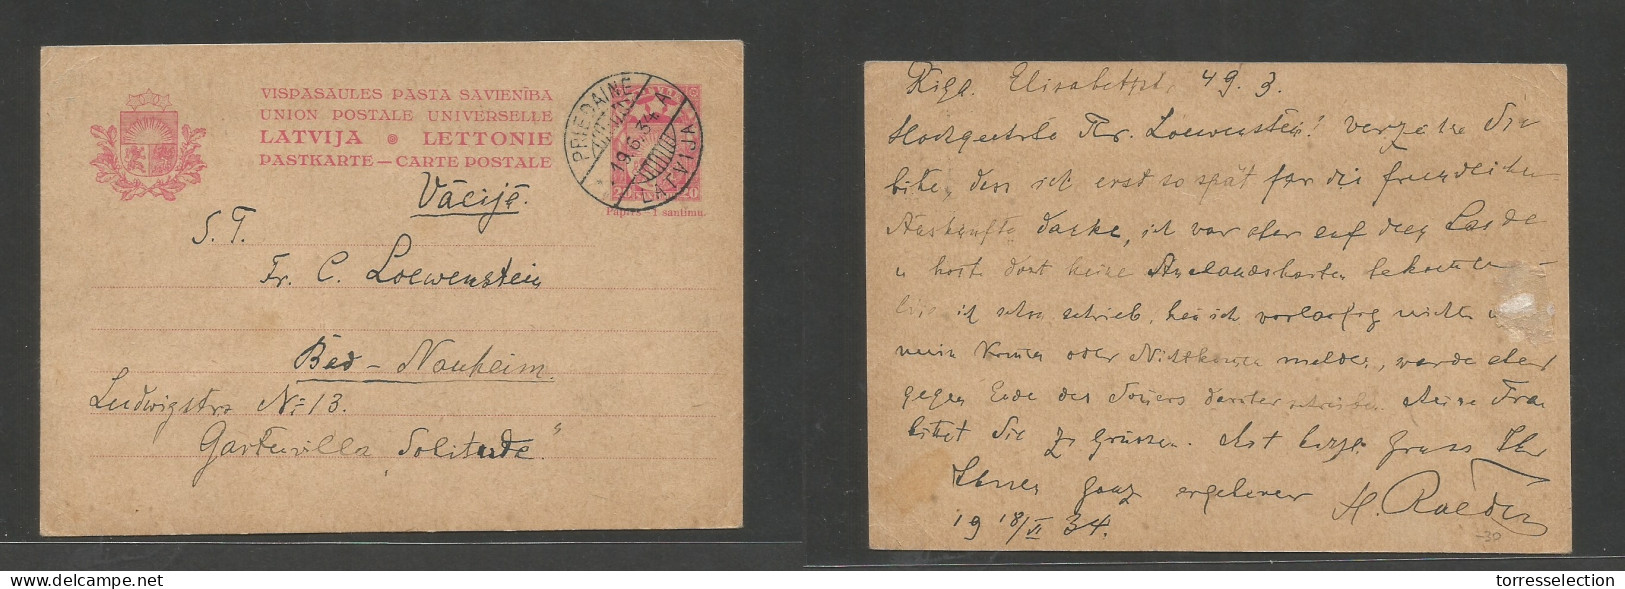 LATVIA. 1934 (19 June) Priedaine - Bed Nouheim. 20s Rose Stat Card. VF Used. SALE. - Lettonie